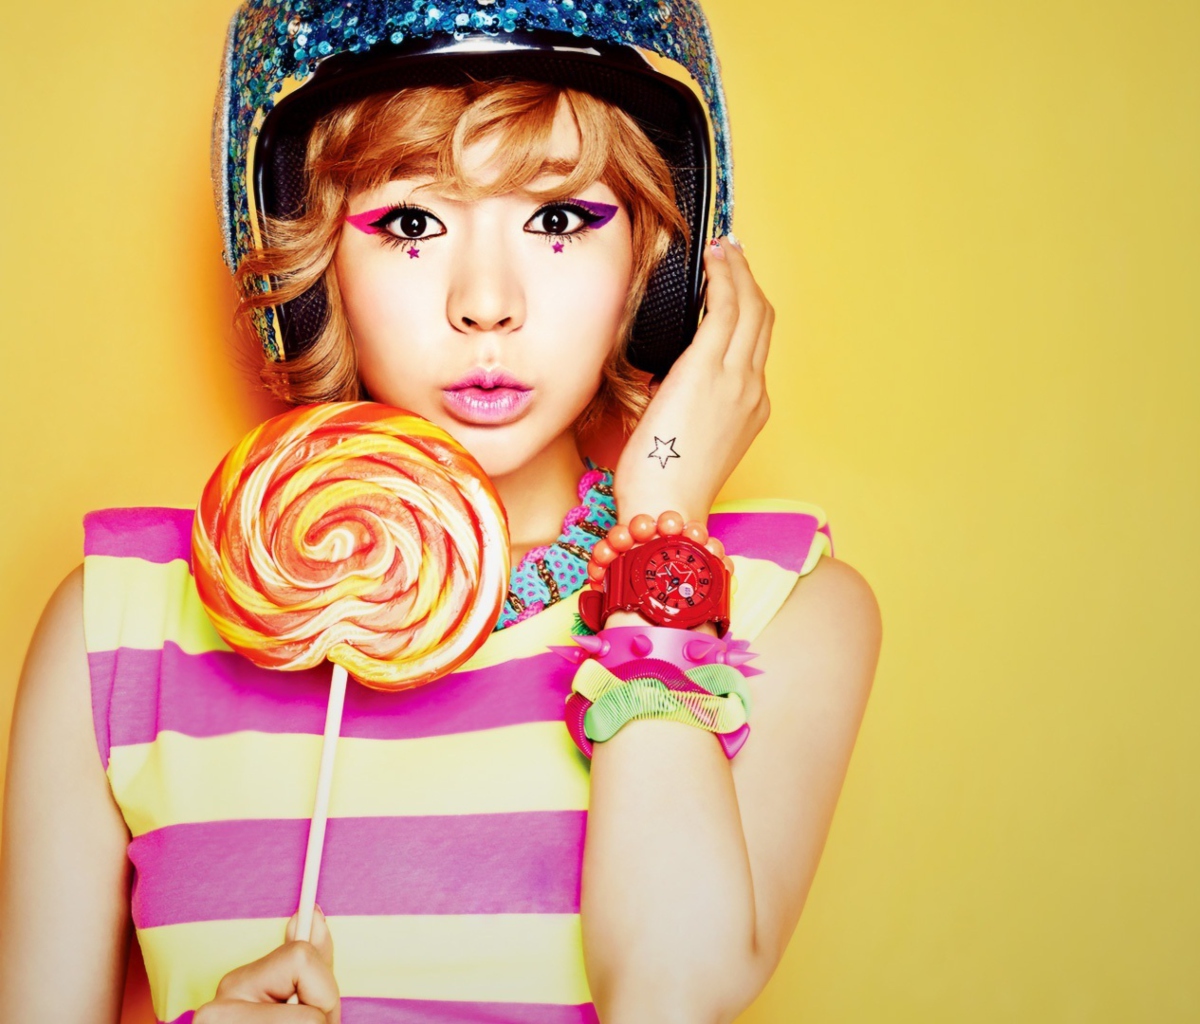 Girls Generation South Korean K-Pop Band wallpaper 1200x1024